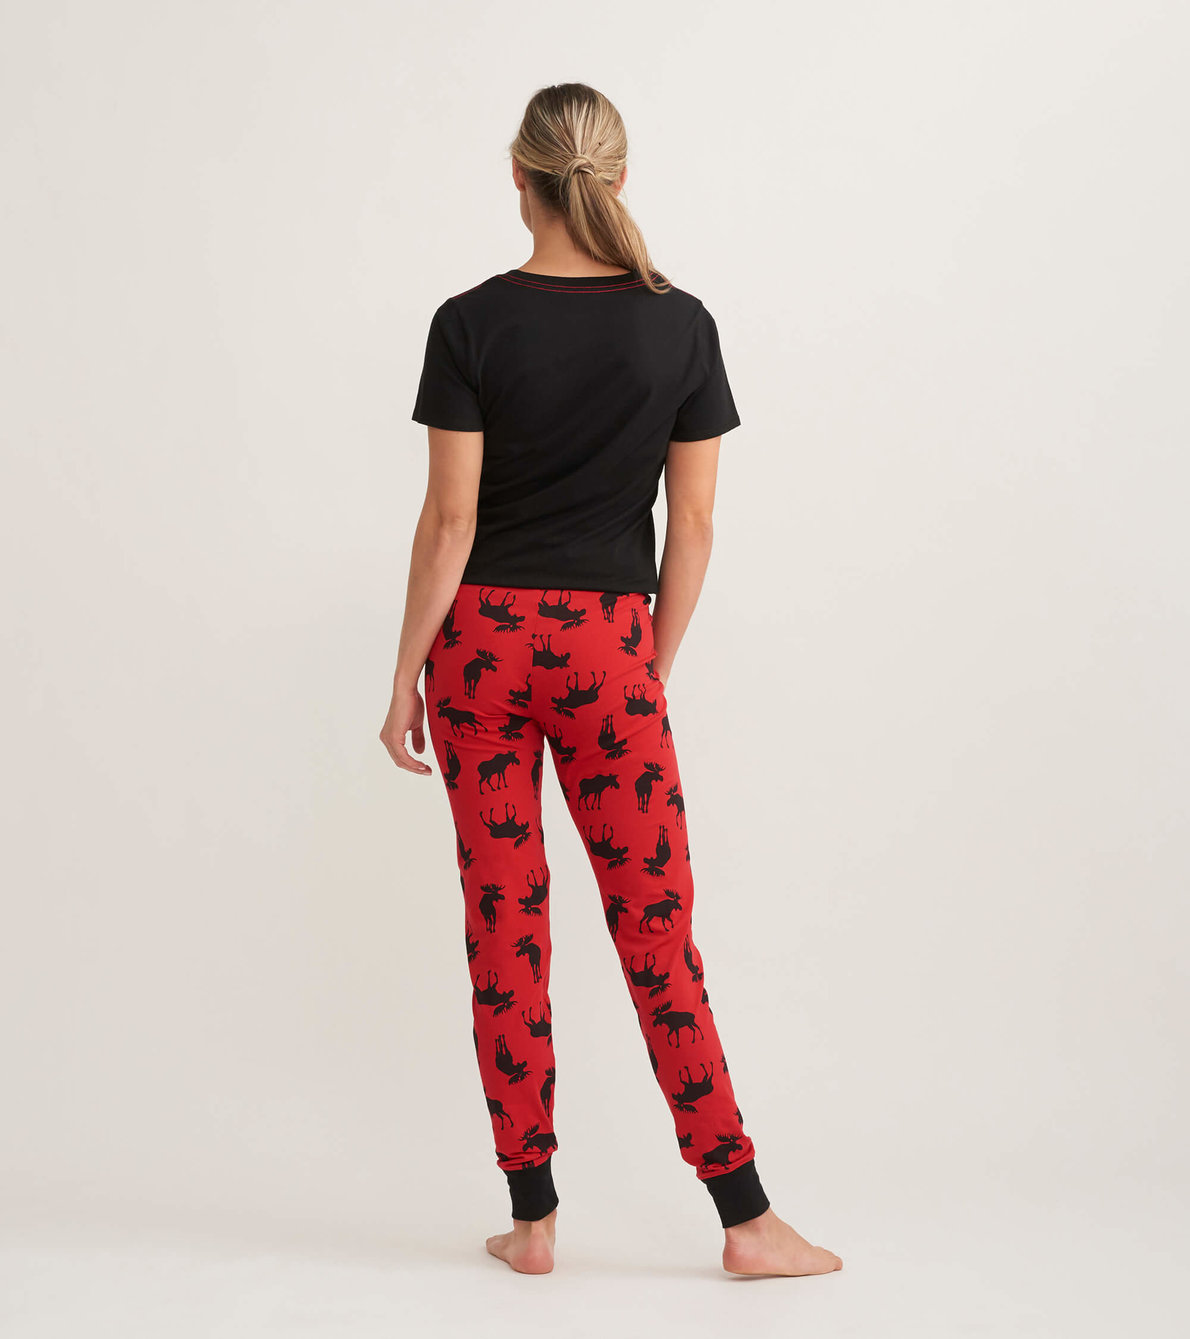 View larger image of Moose On Red Women's Pajama Tee